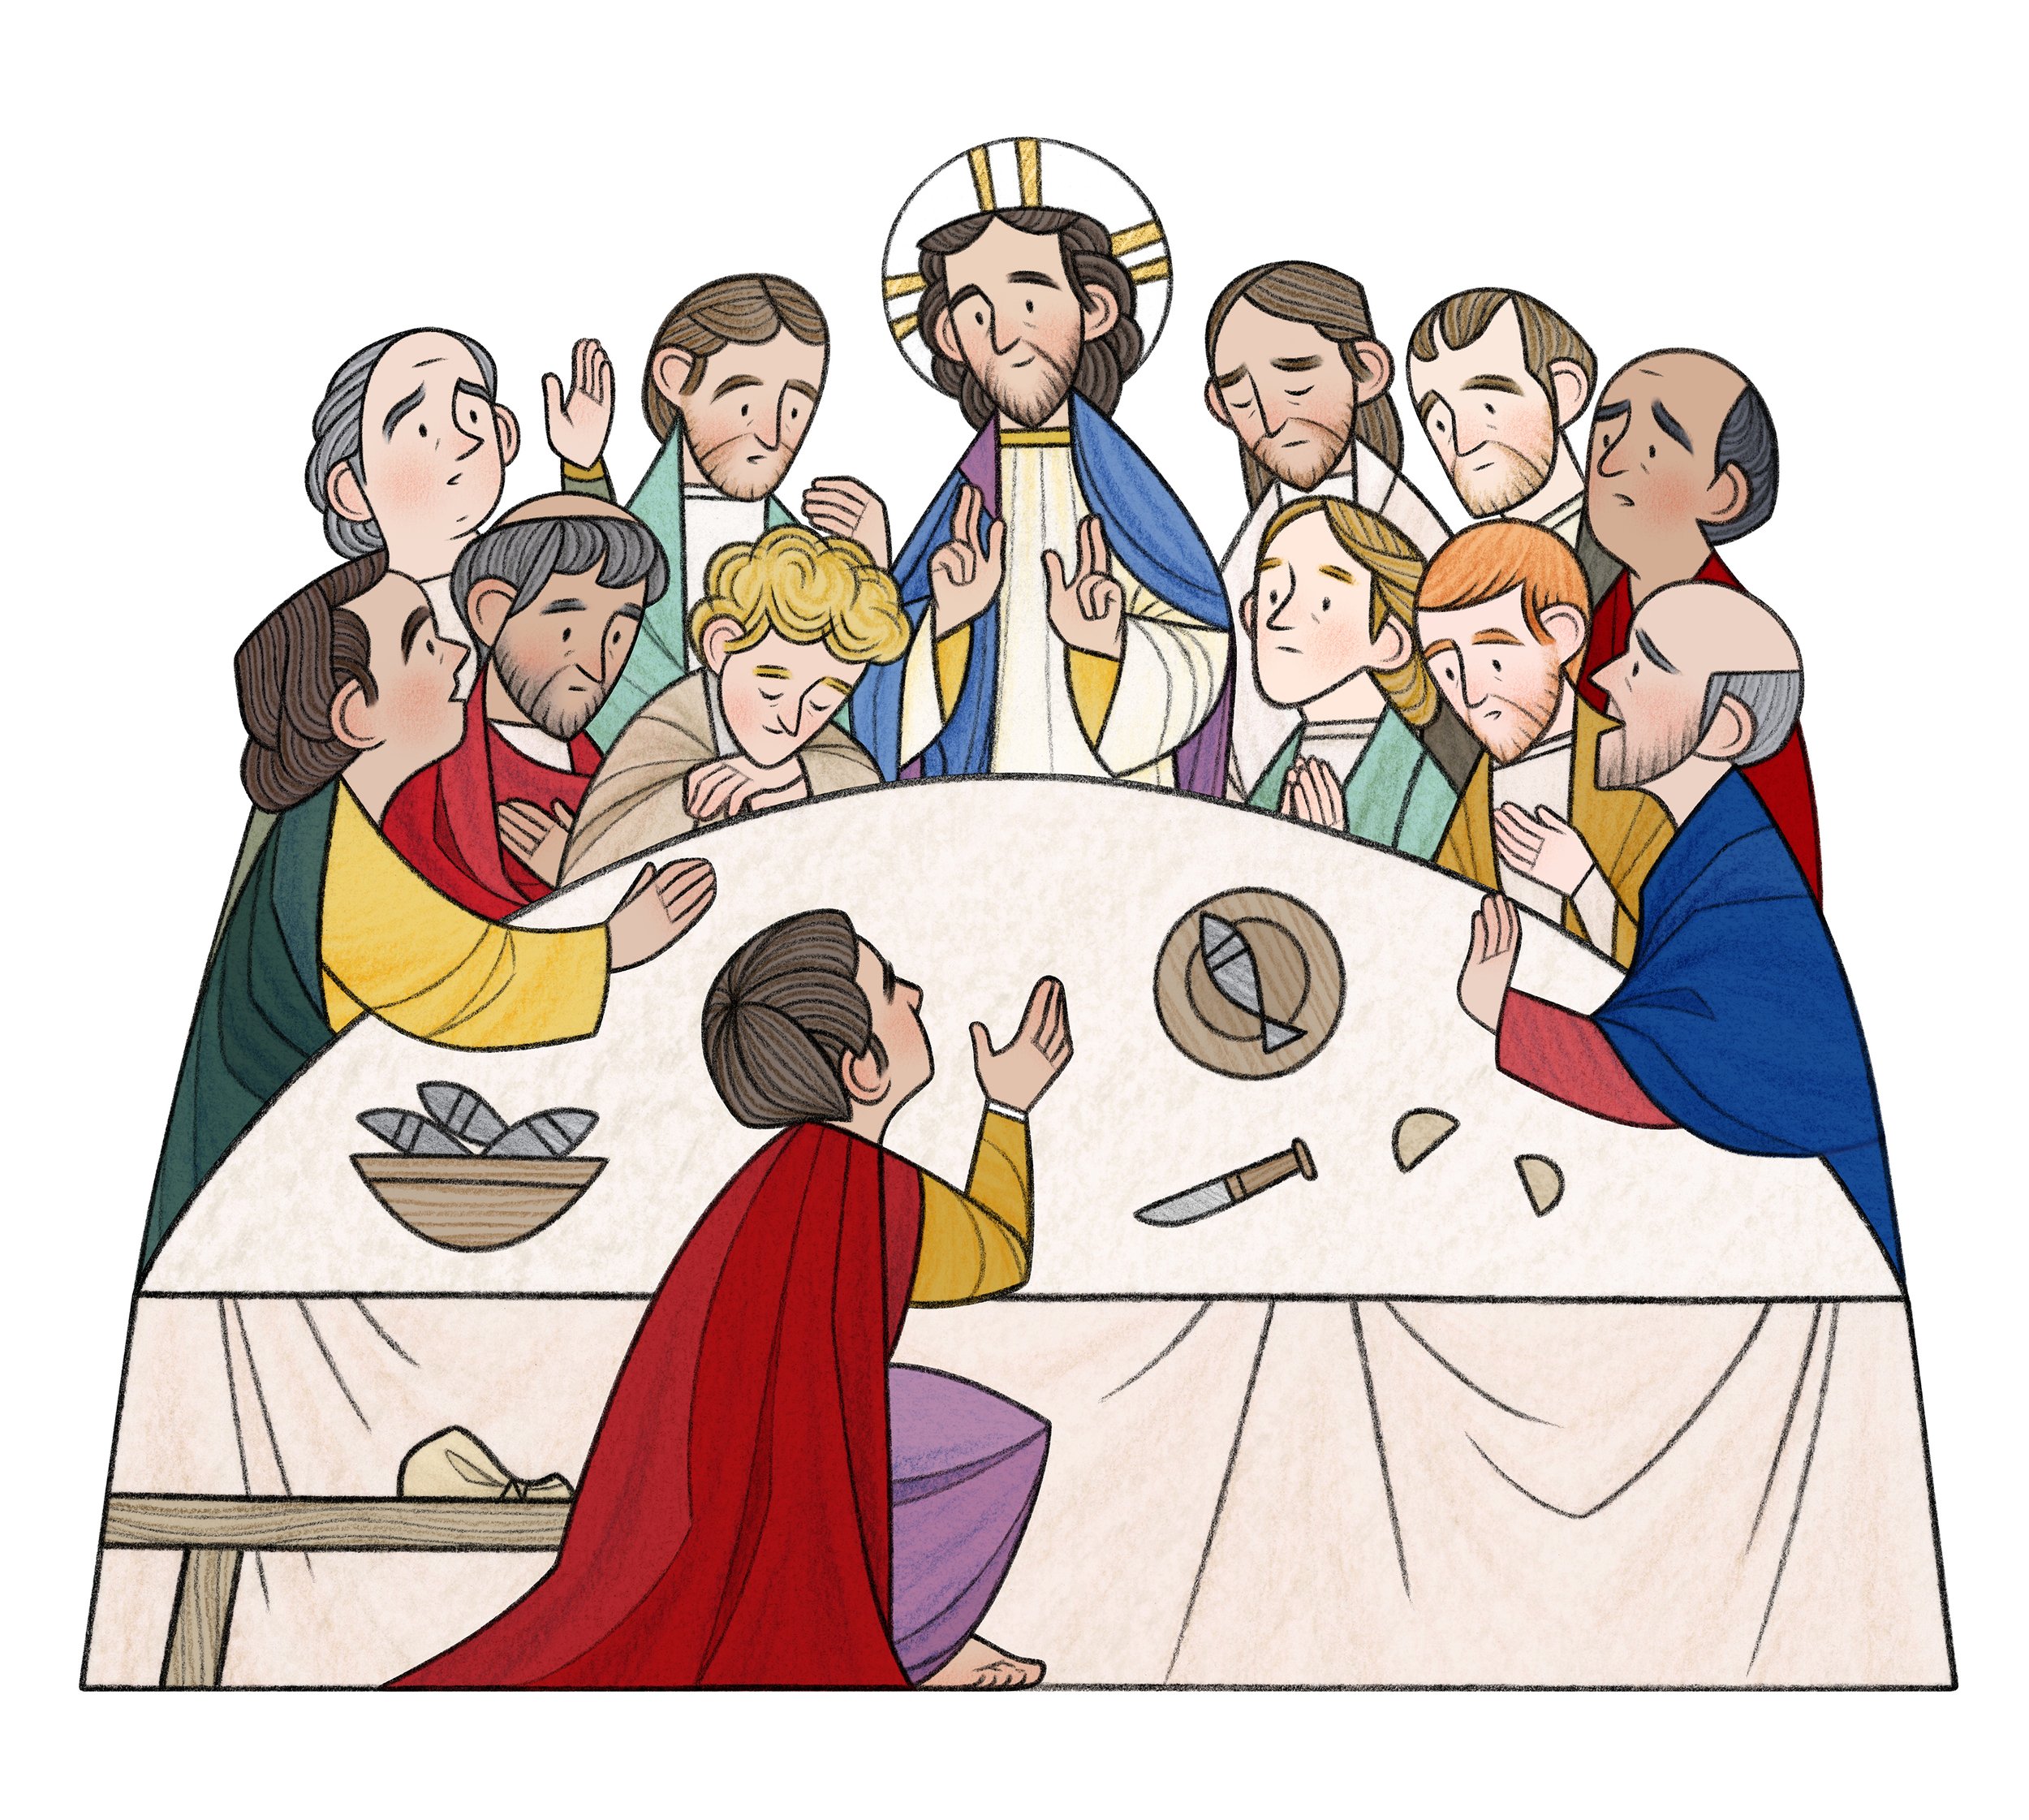 01_AY-PE_Bath Abbey_Bath Old English Gospels Interactive_The Last Supper Illustration_01.jpg